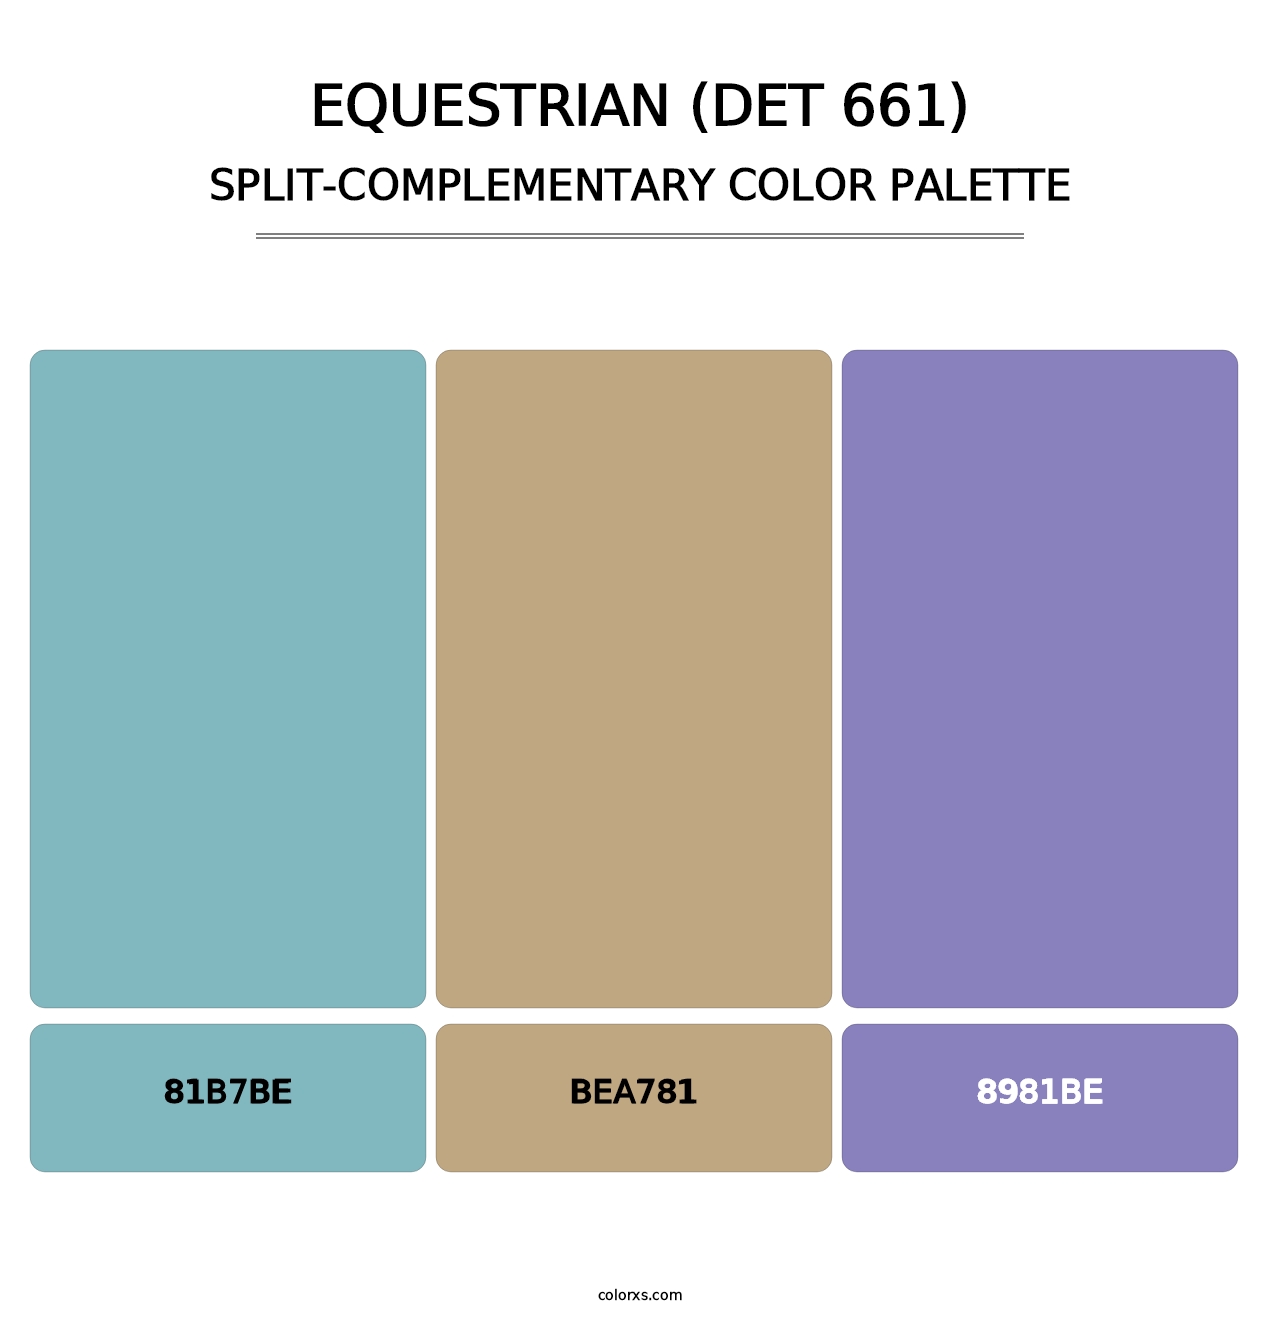 Equestrian (DET 661) - Split-Complementary Color Palette